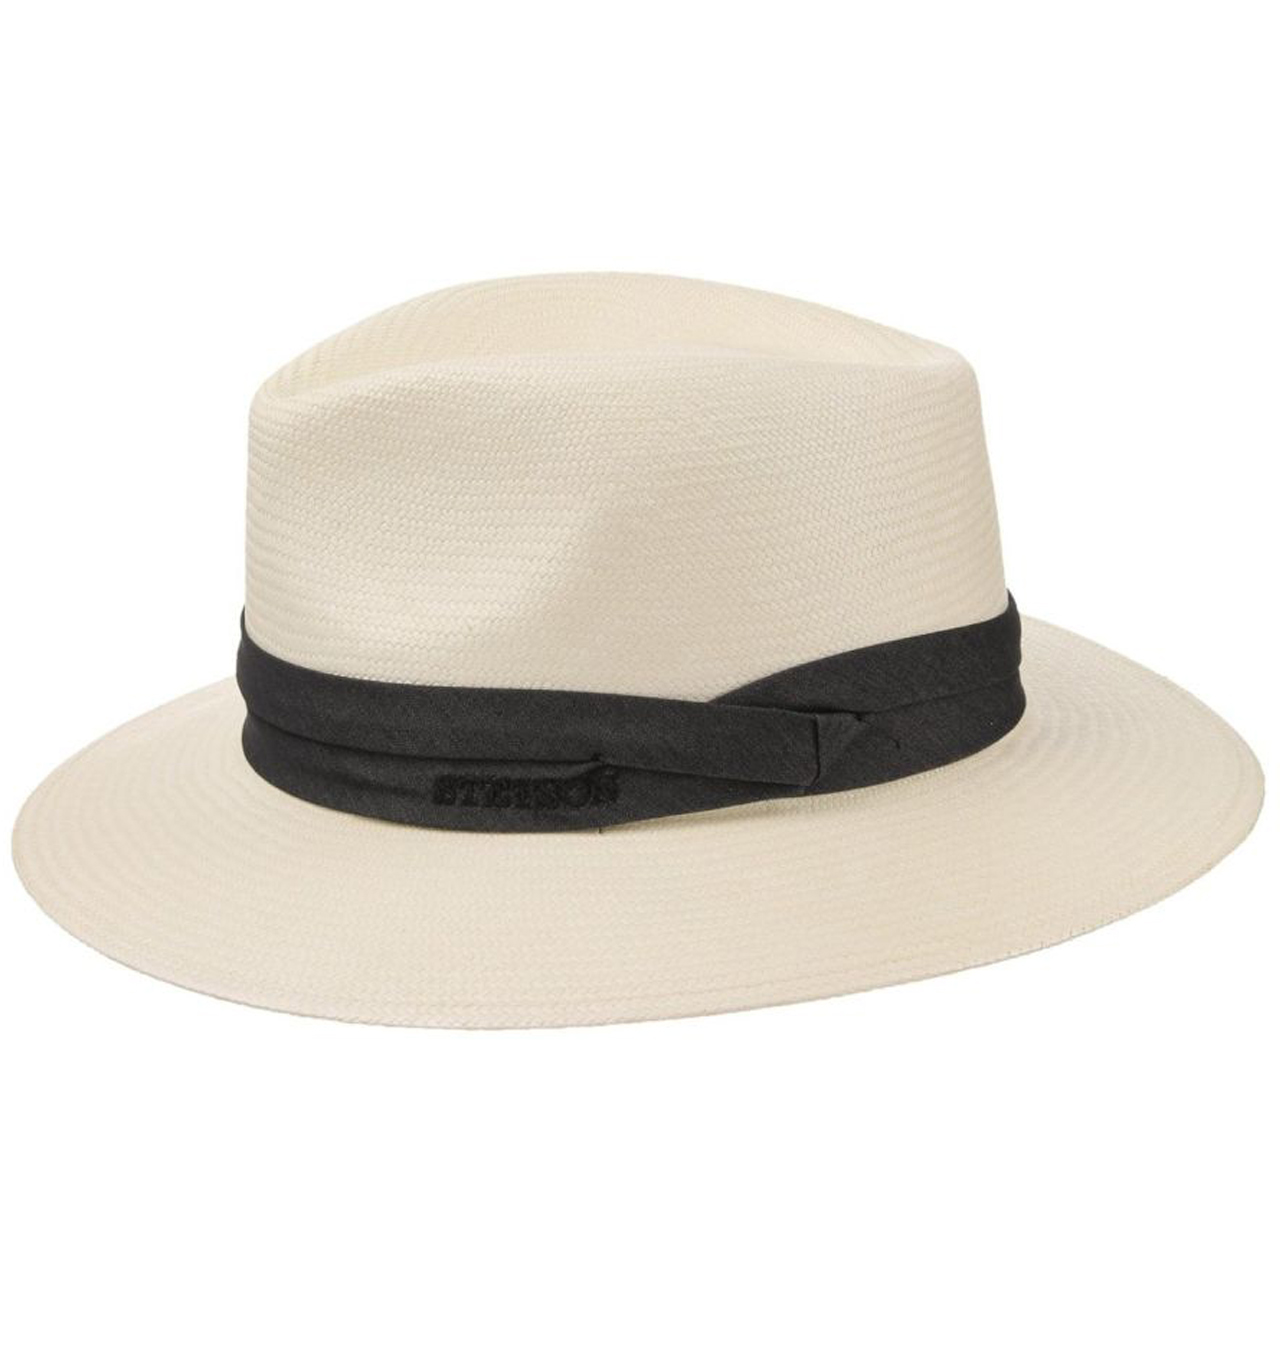 Stetson---Jefferson-Bleached-Panama-Hat---Cream-White1